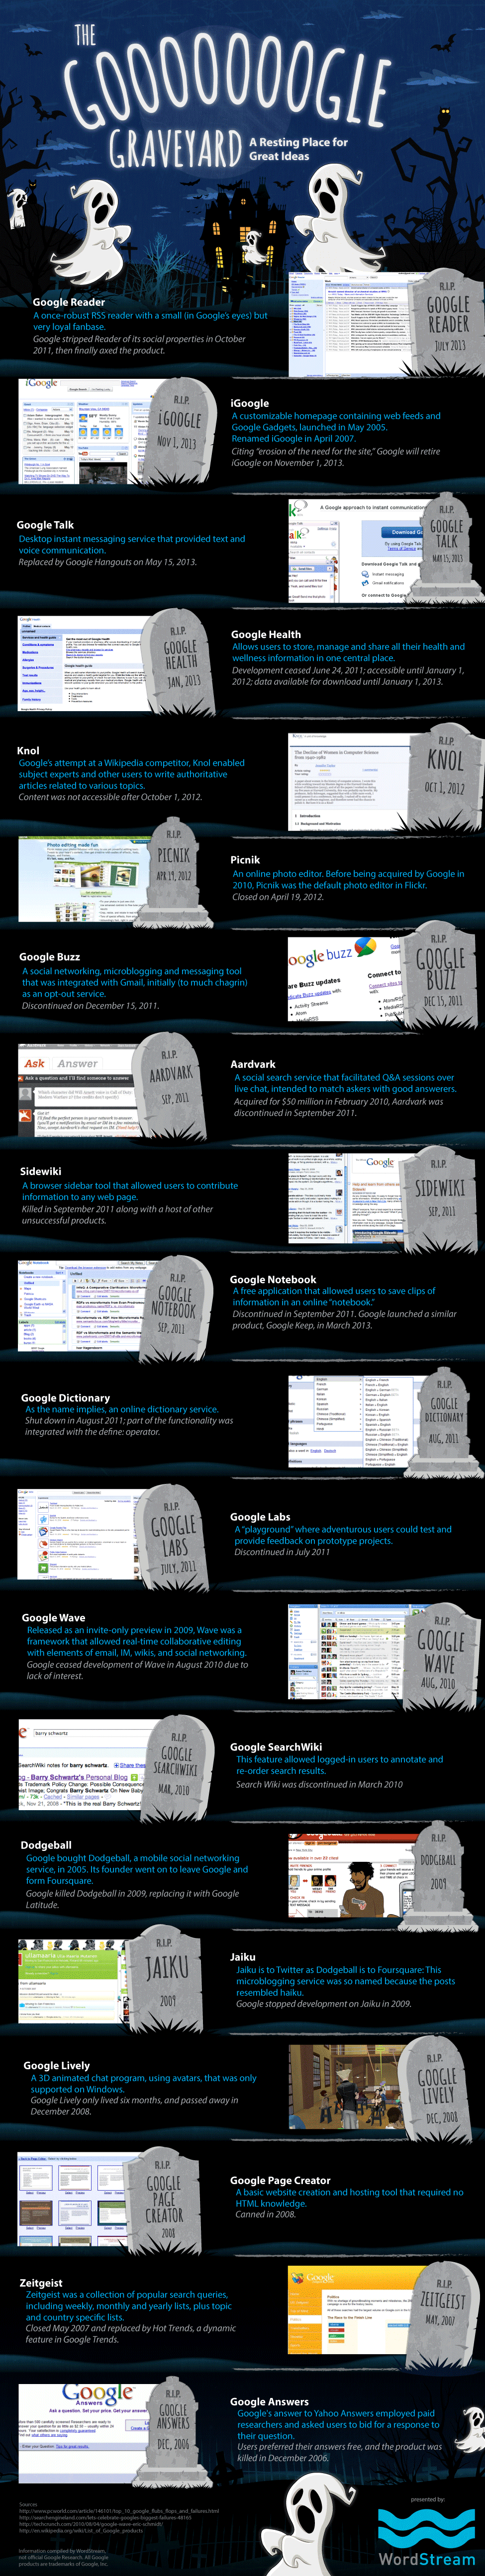 the-google-ideas-graveyard-infographic